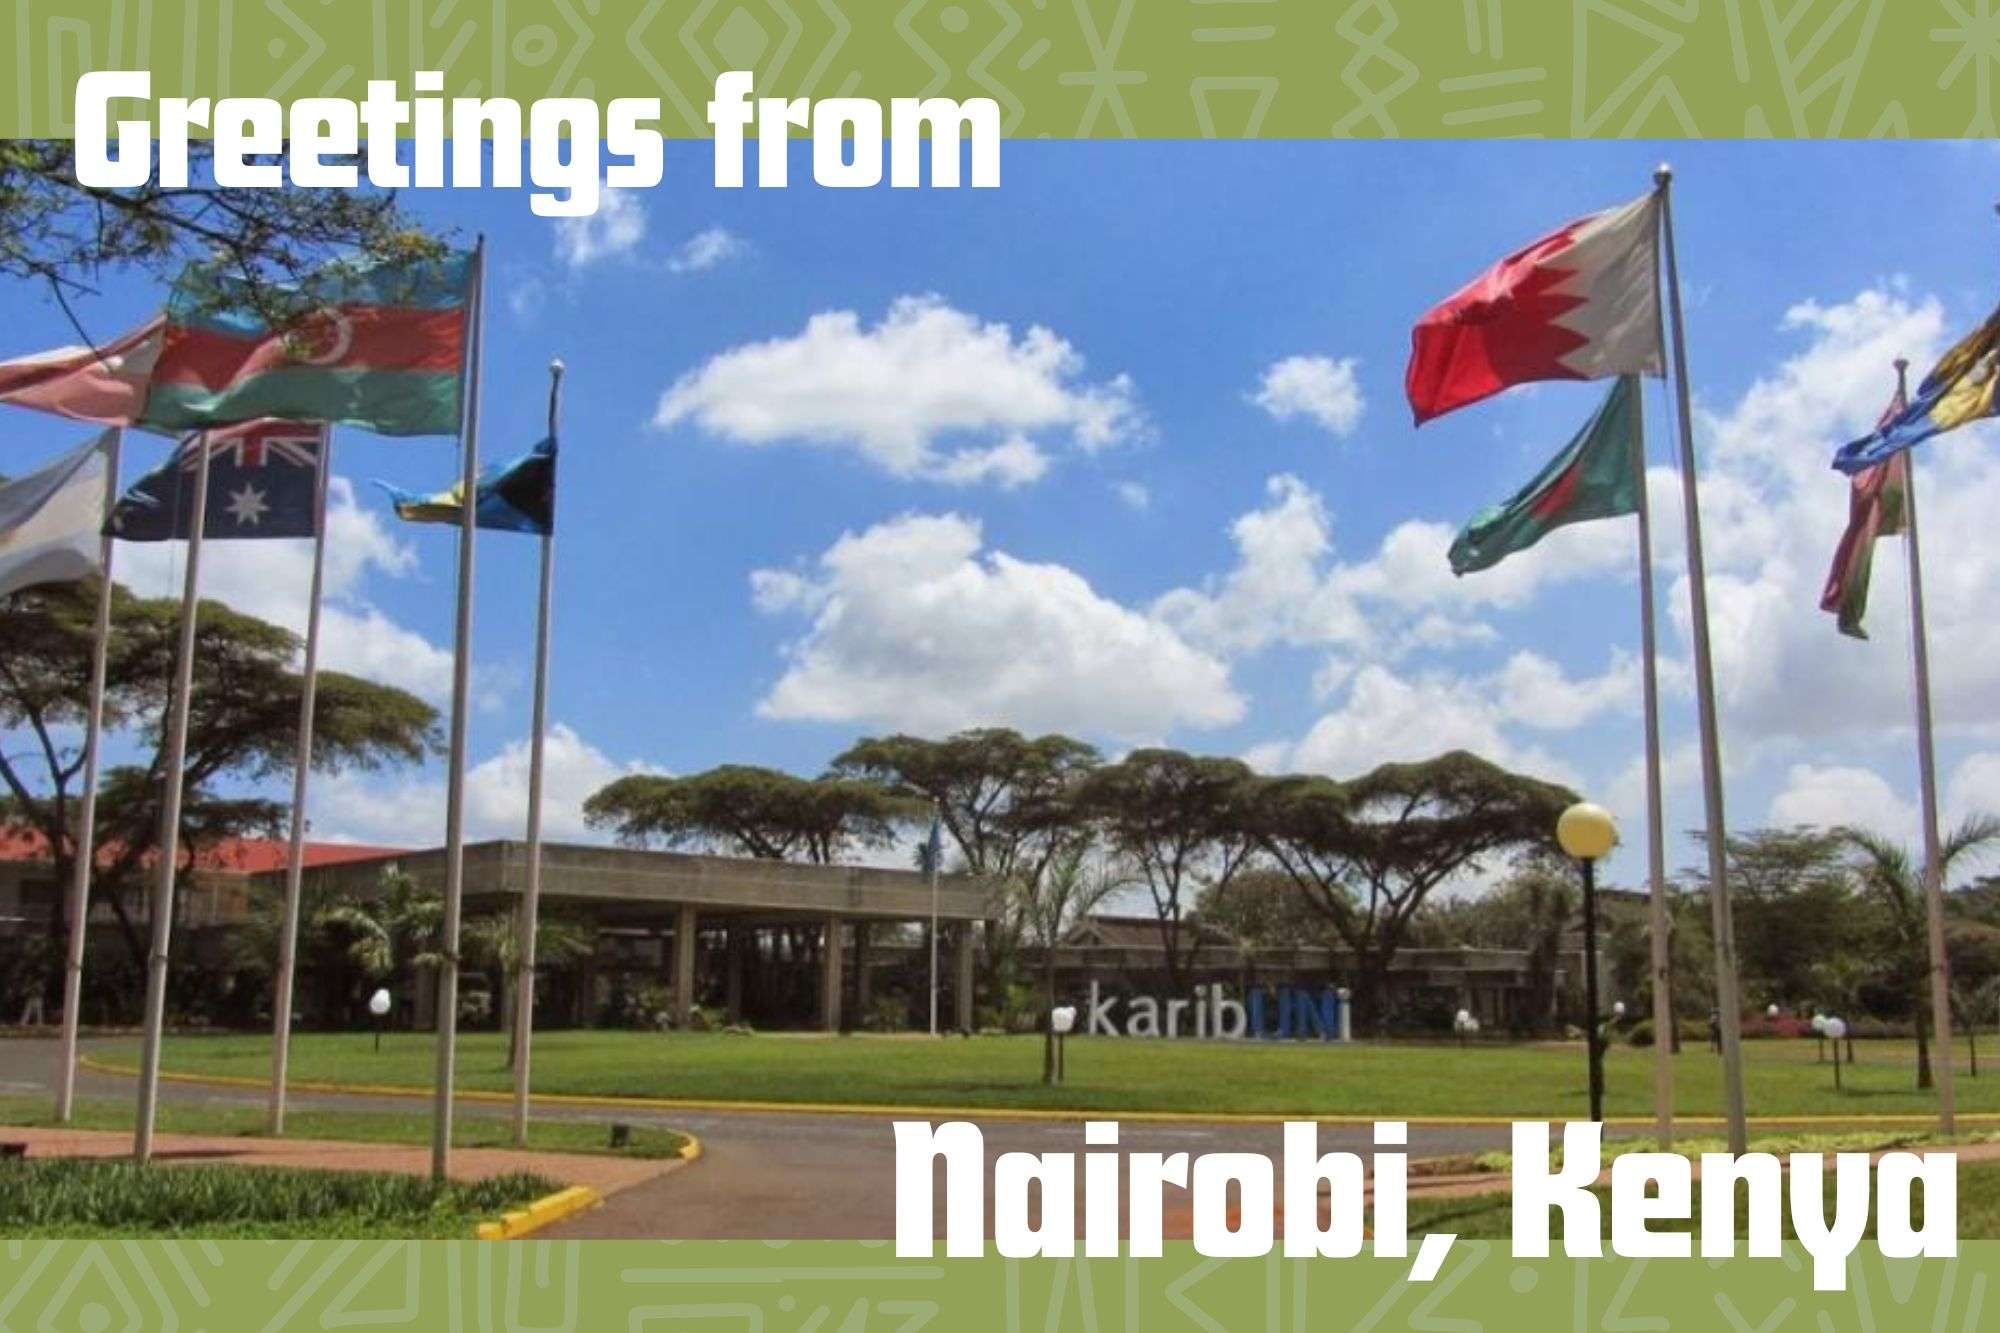 Greetings from Nairobi, Kenya postcard image